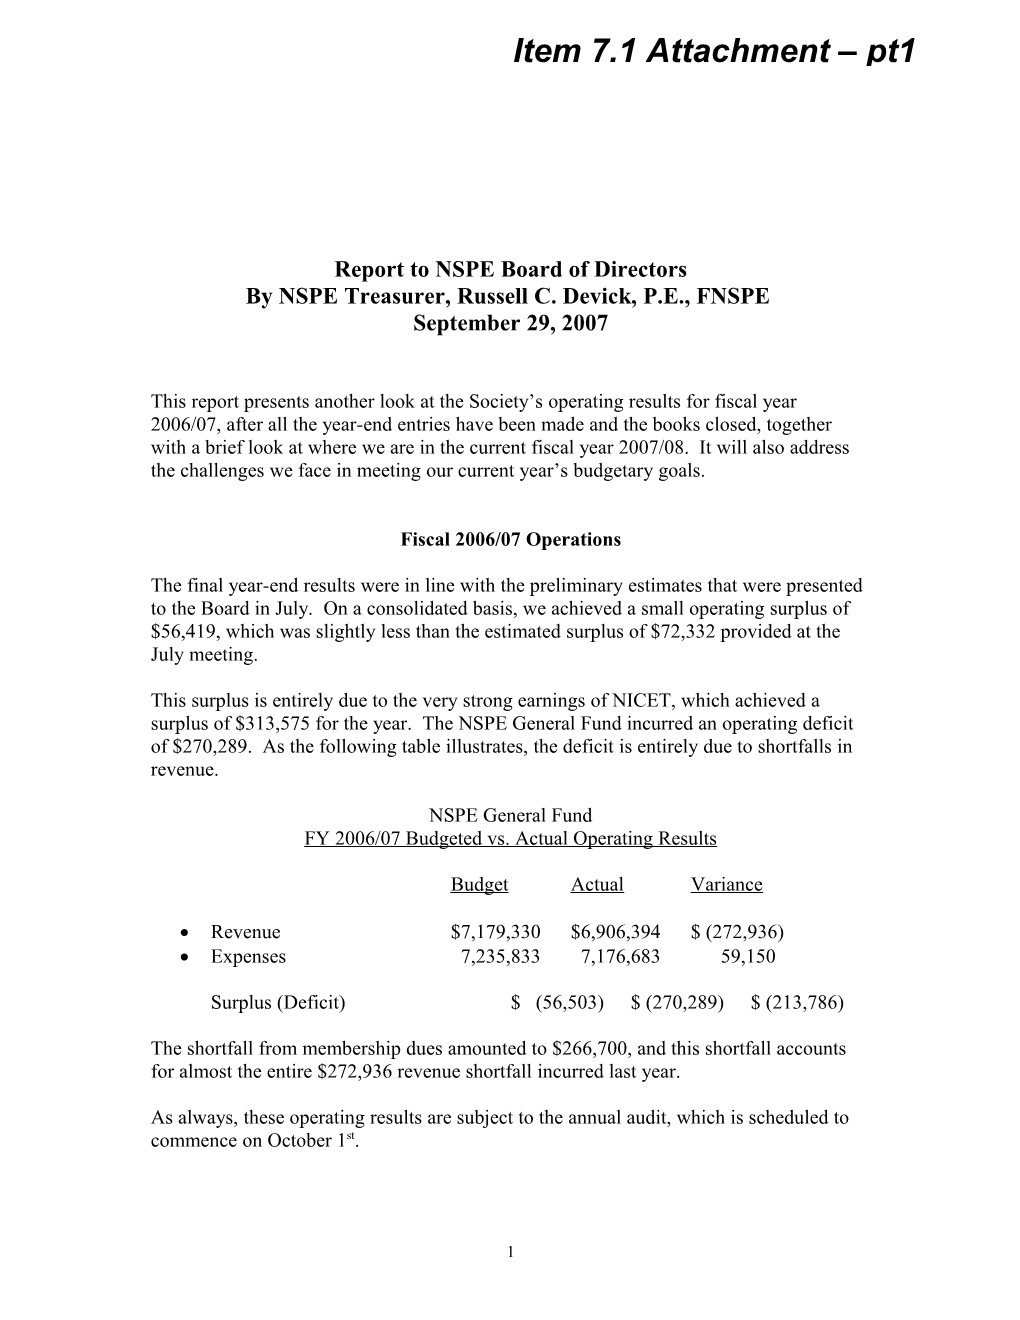 Report to NSPE Board of Directors